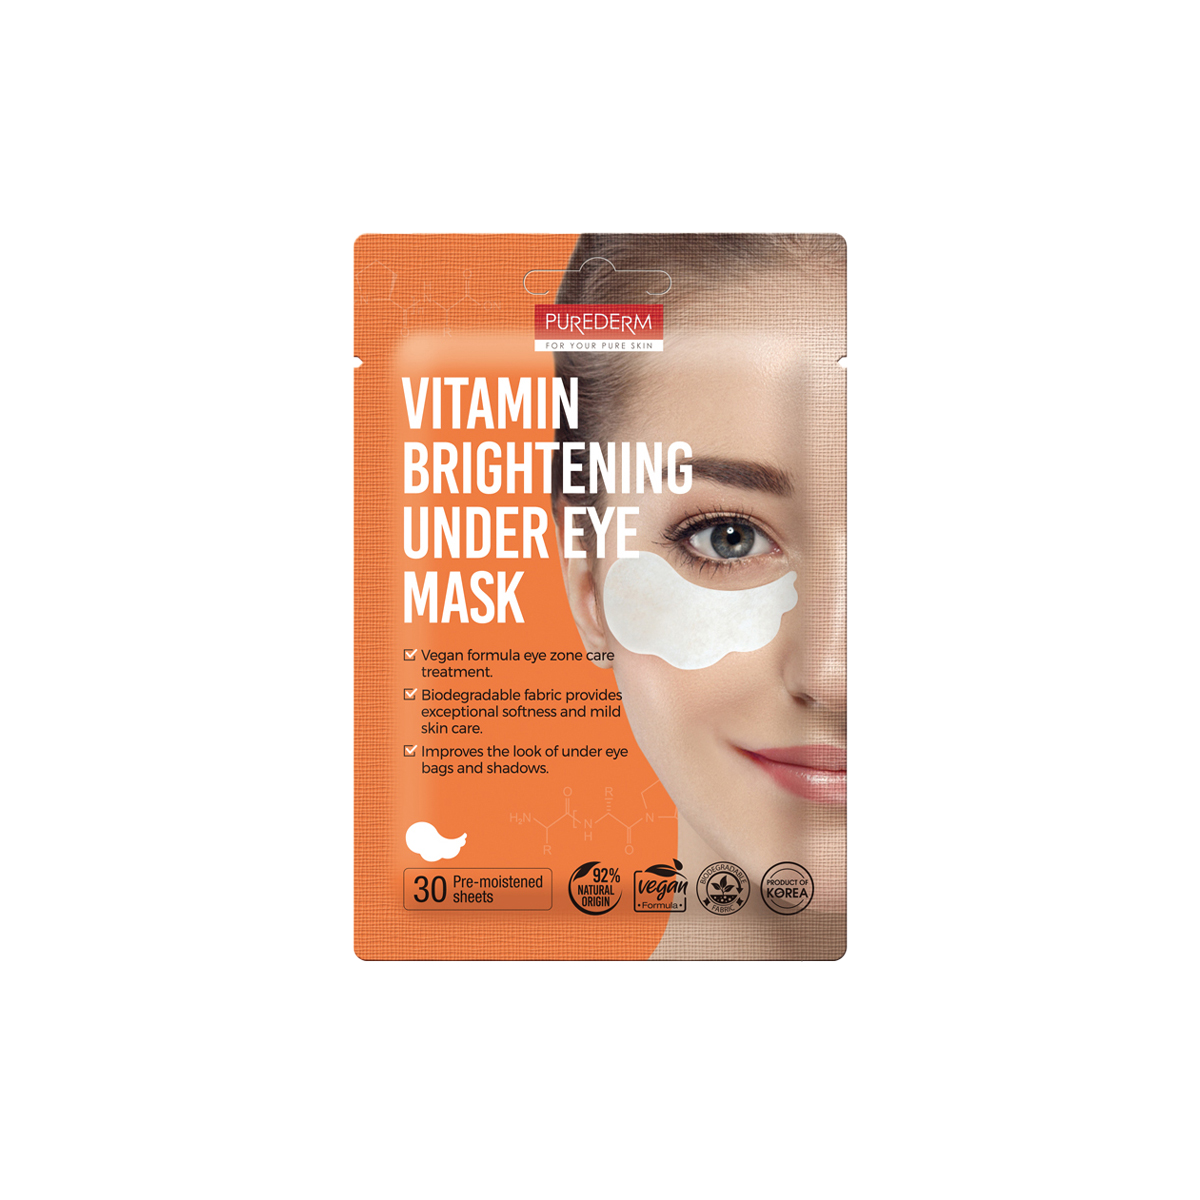 143-8809738321195-ADS-714-Purederm Vitamin Brightening Under Eye Mask (30 Pre-moistened sheets)